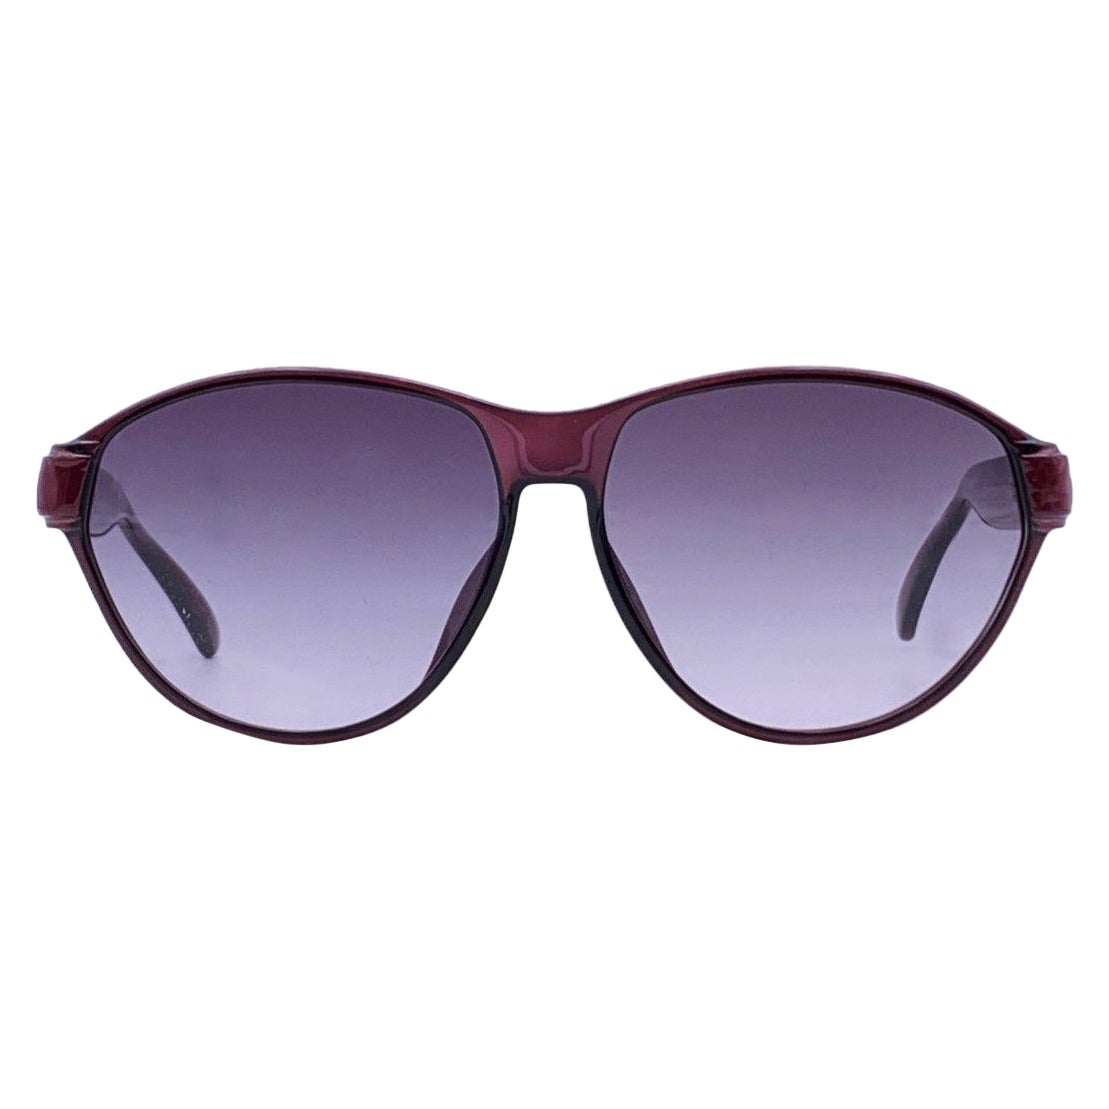 Christian Dior Vintage Black Burgundy Sunglasses 2325 59-13 140 mm